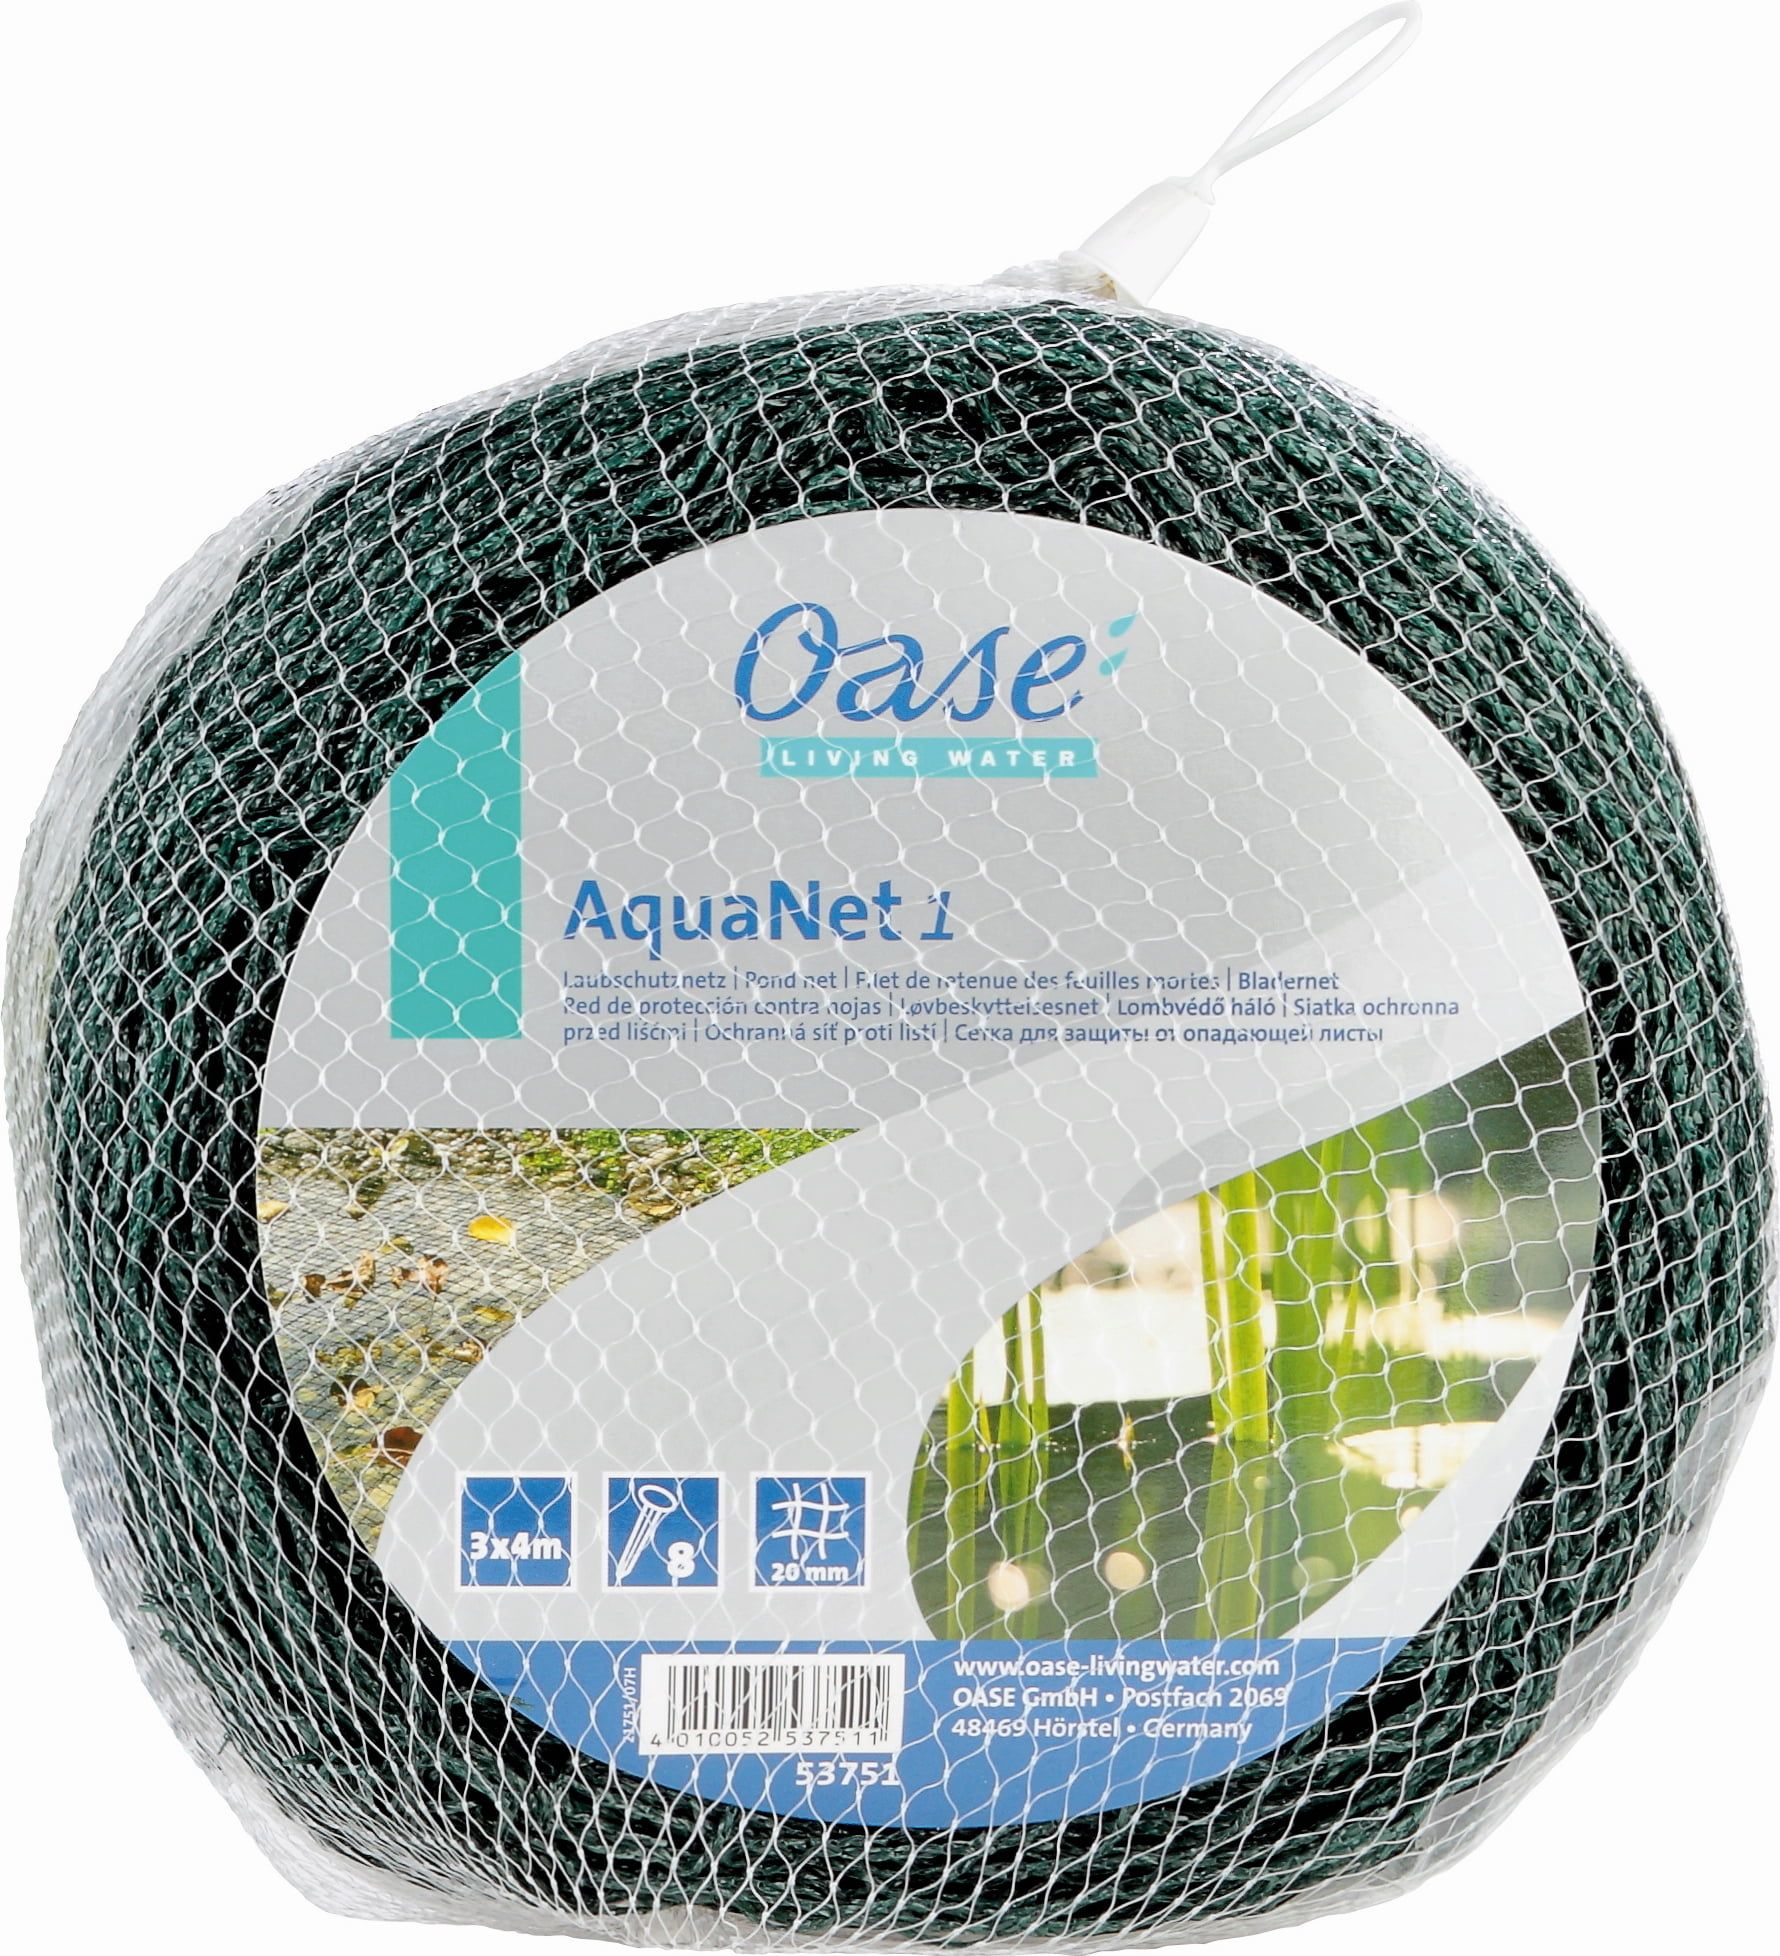 AquaNet pond net 1 / 3 x 4 m, Buy pond nets